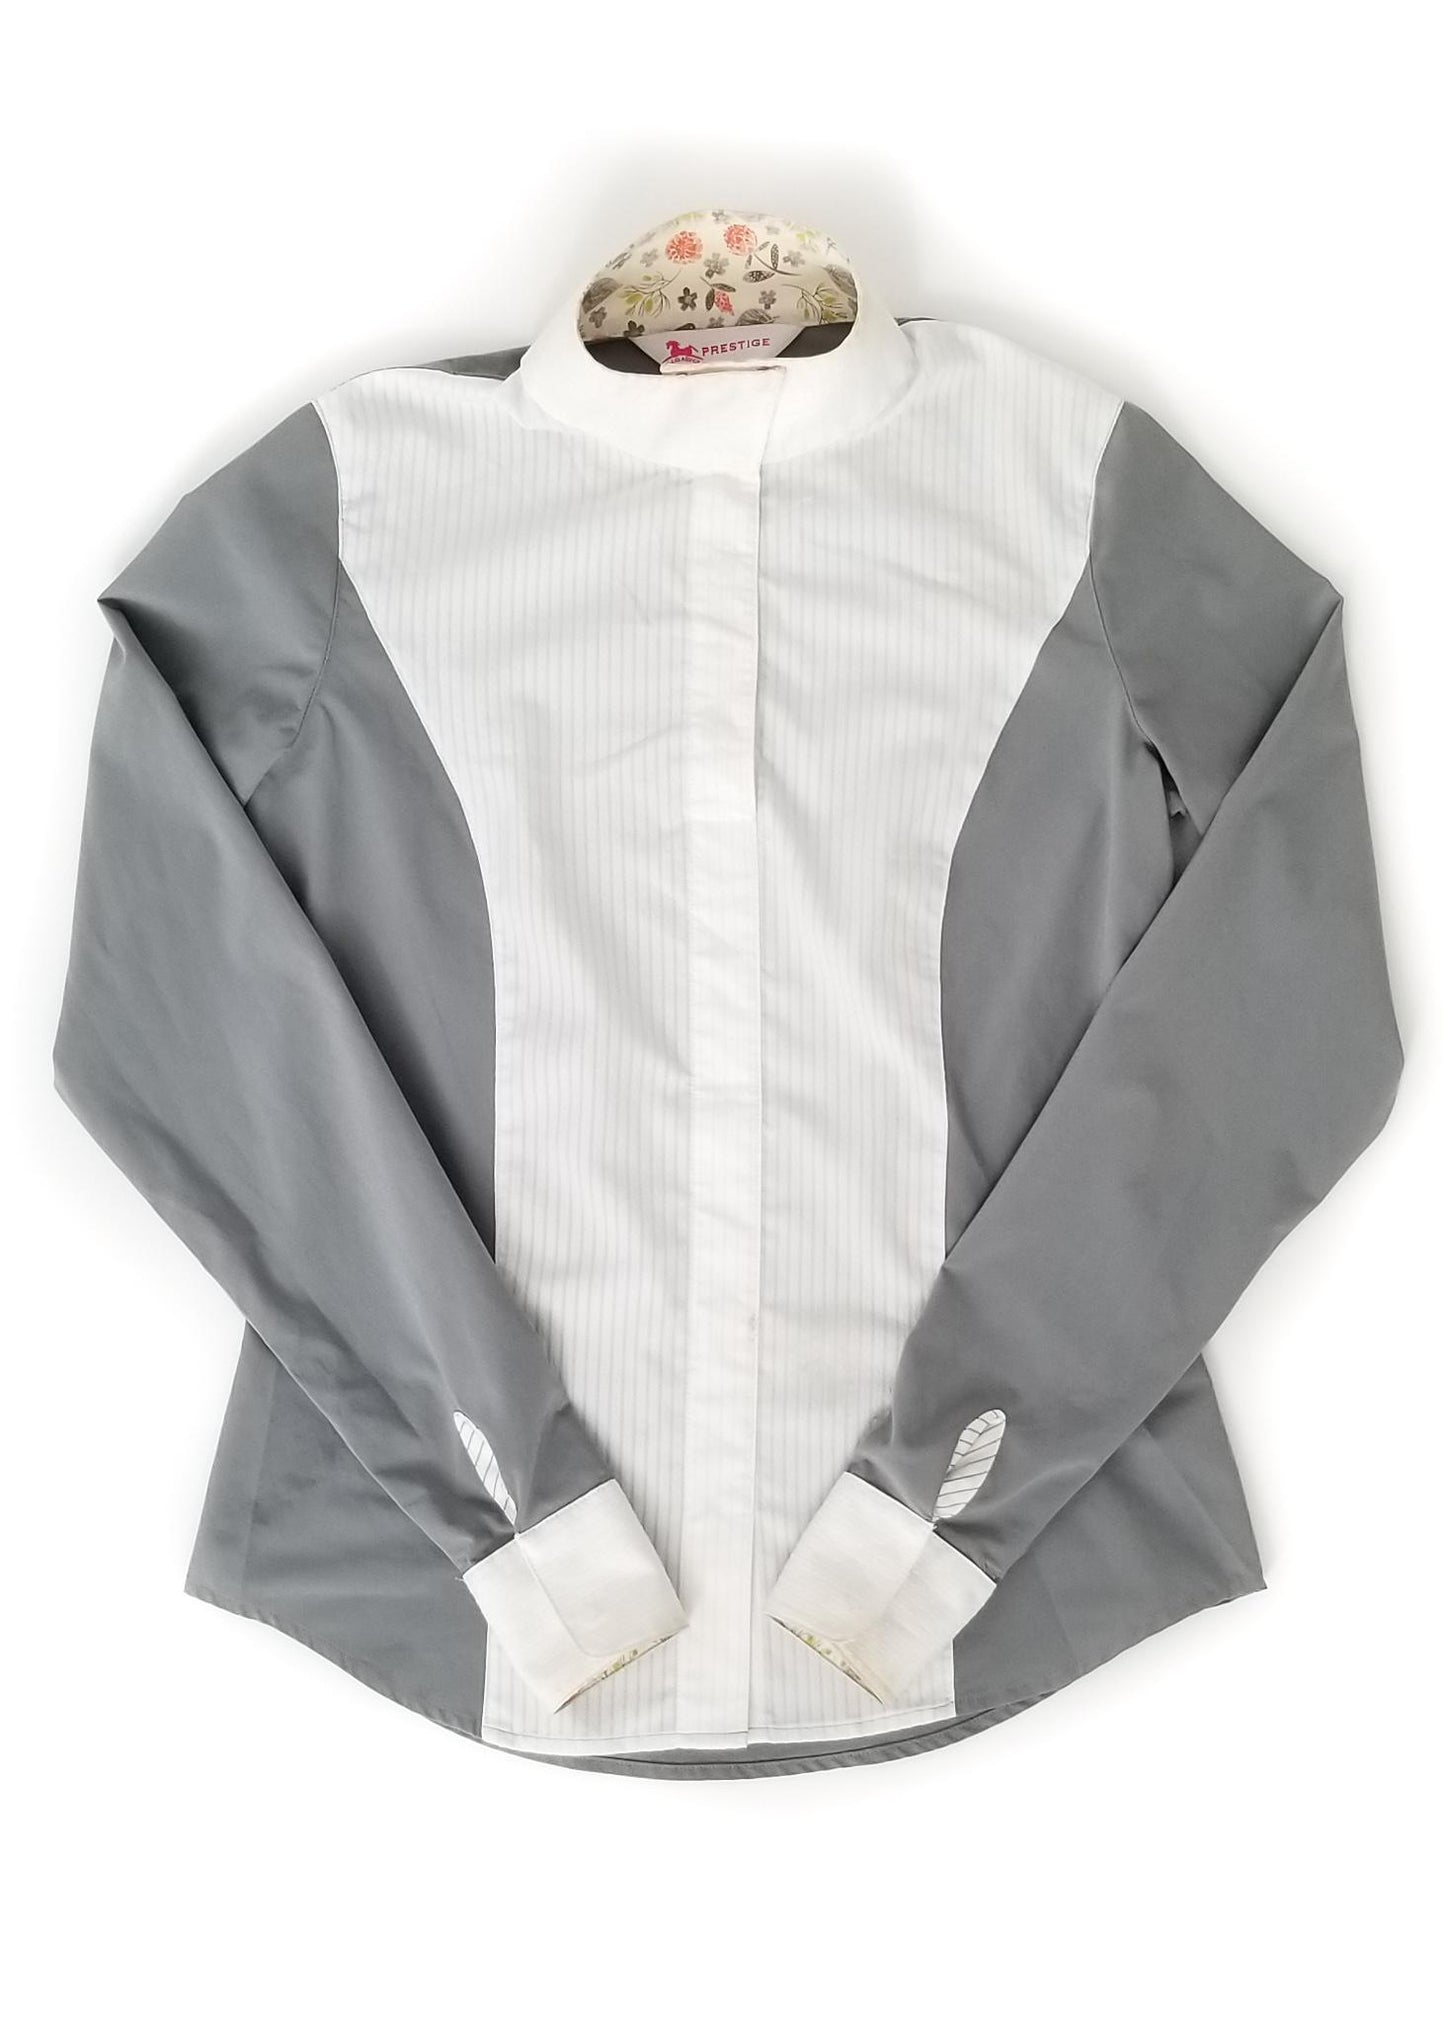 RJ Classics Prestige Collection Show Shirt - Grey & White - Women's Small